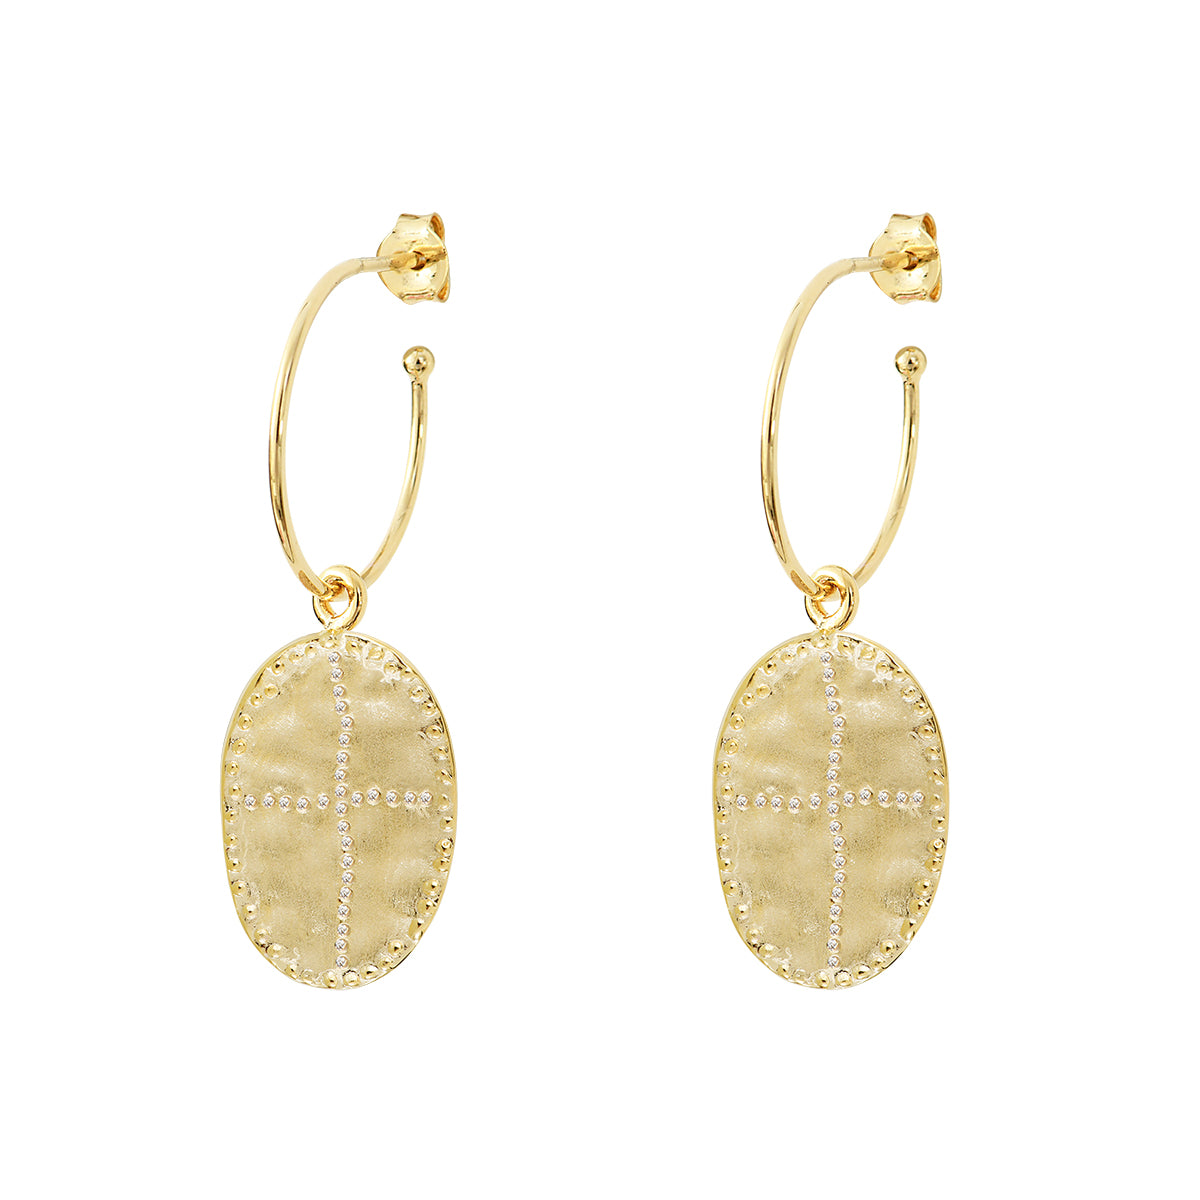 gold plated hoop earrings with bazile pendant louise hendricks bazile earrings in white